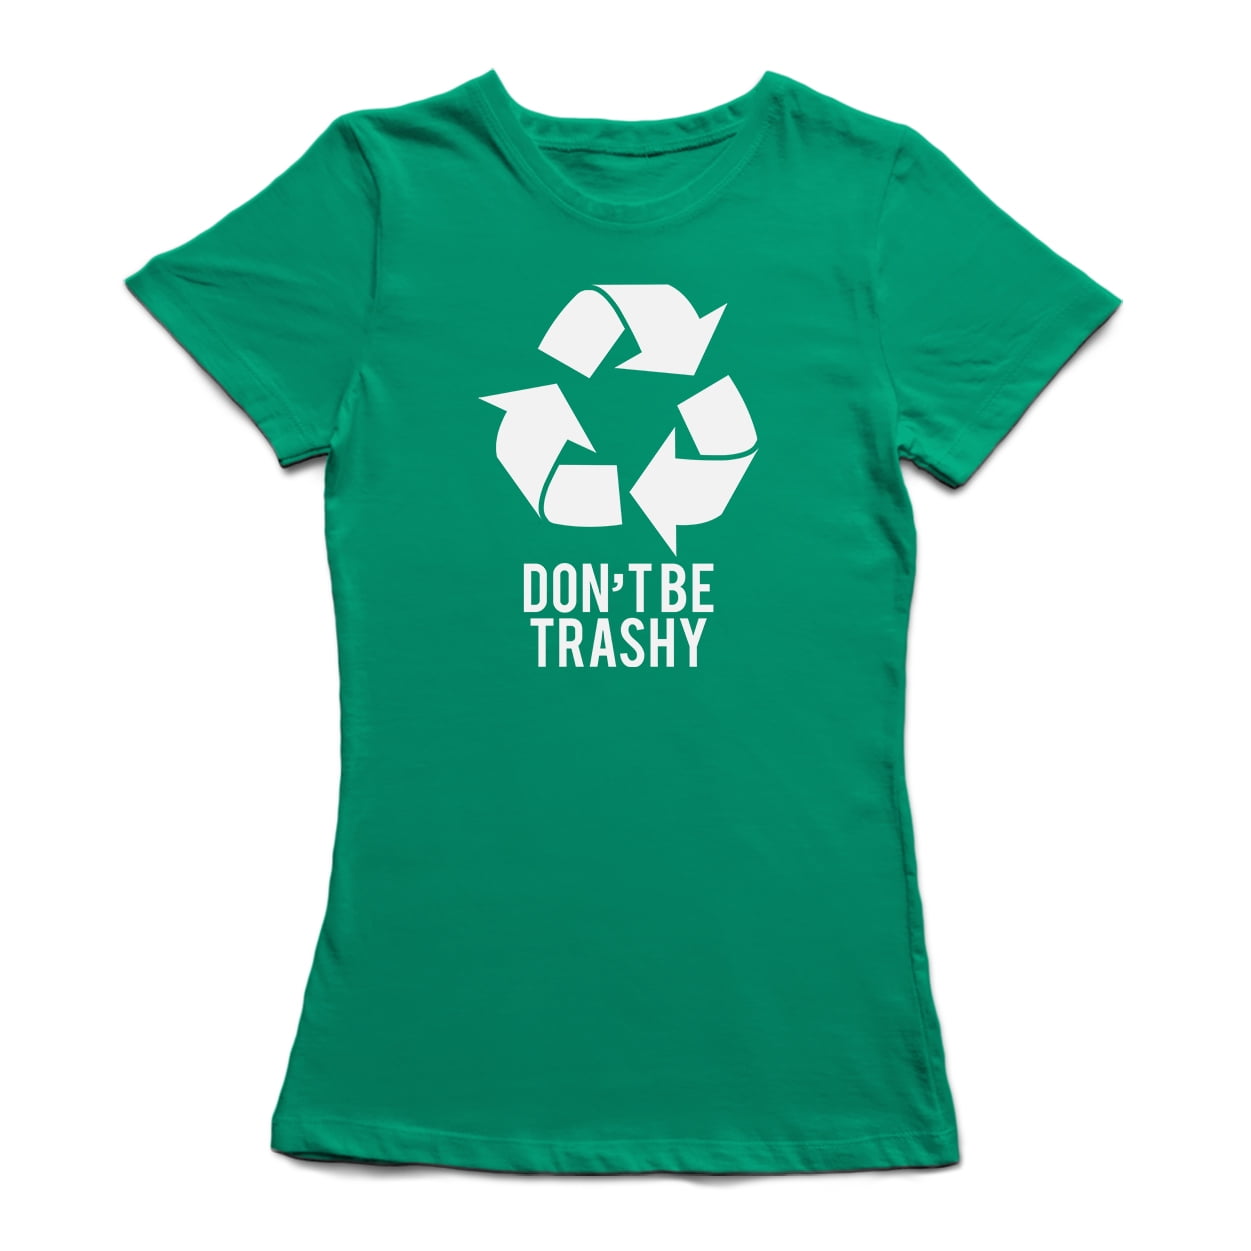 Tee Bangers - Don't Be Trashy Women's T-shirt - Walmart.com - Walmart.com